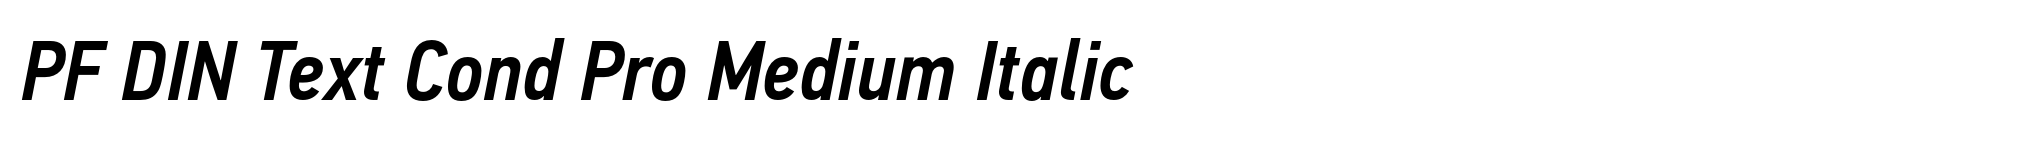 PF DIN Text Cond Pro Medium Italic image